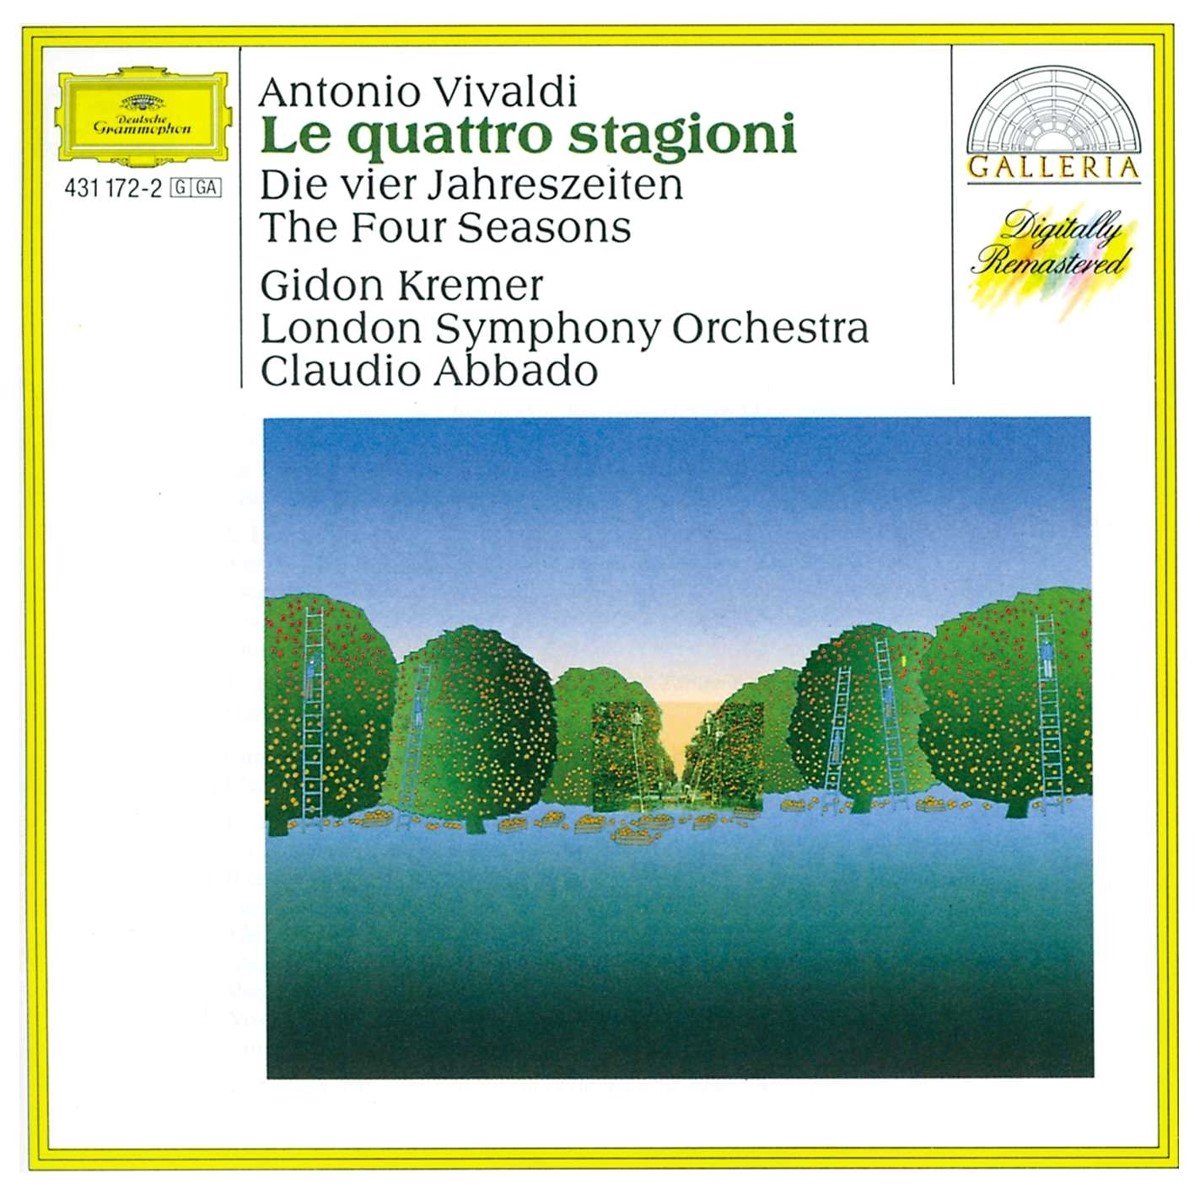 Gidon Kremer, London Symphony Orchestra, Claudio Abbado - Vivaldi: Le Quattro Stagioni (CD) - Gidon Kremer, London Symphony Orchestra, Claudio Abbado